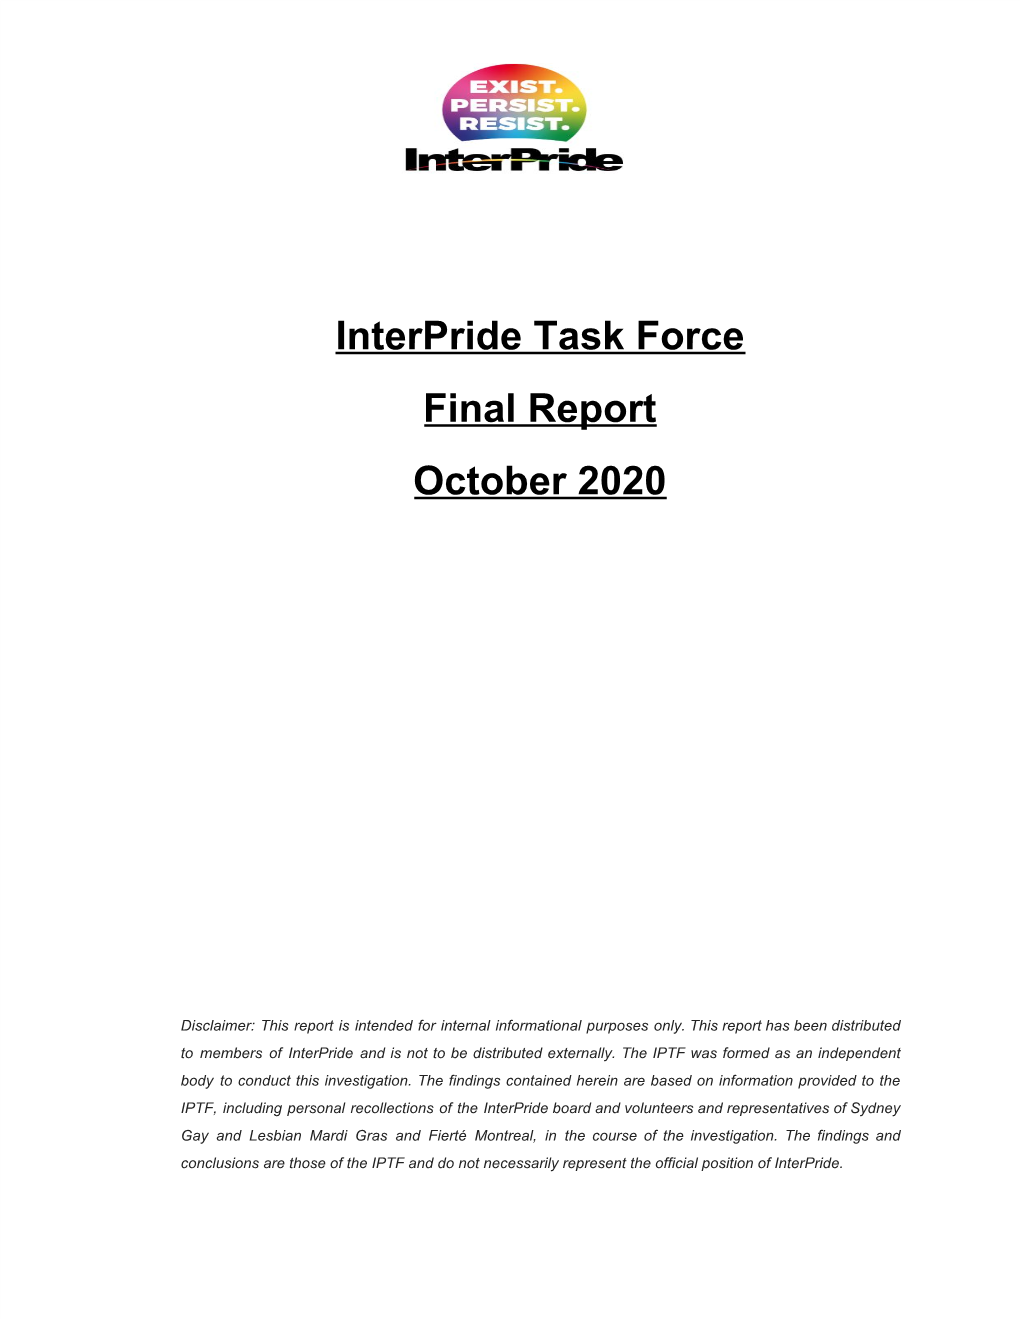 Interpride Task Force Final Report October 2020